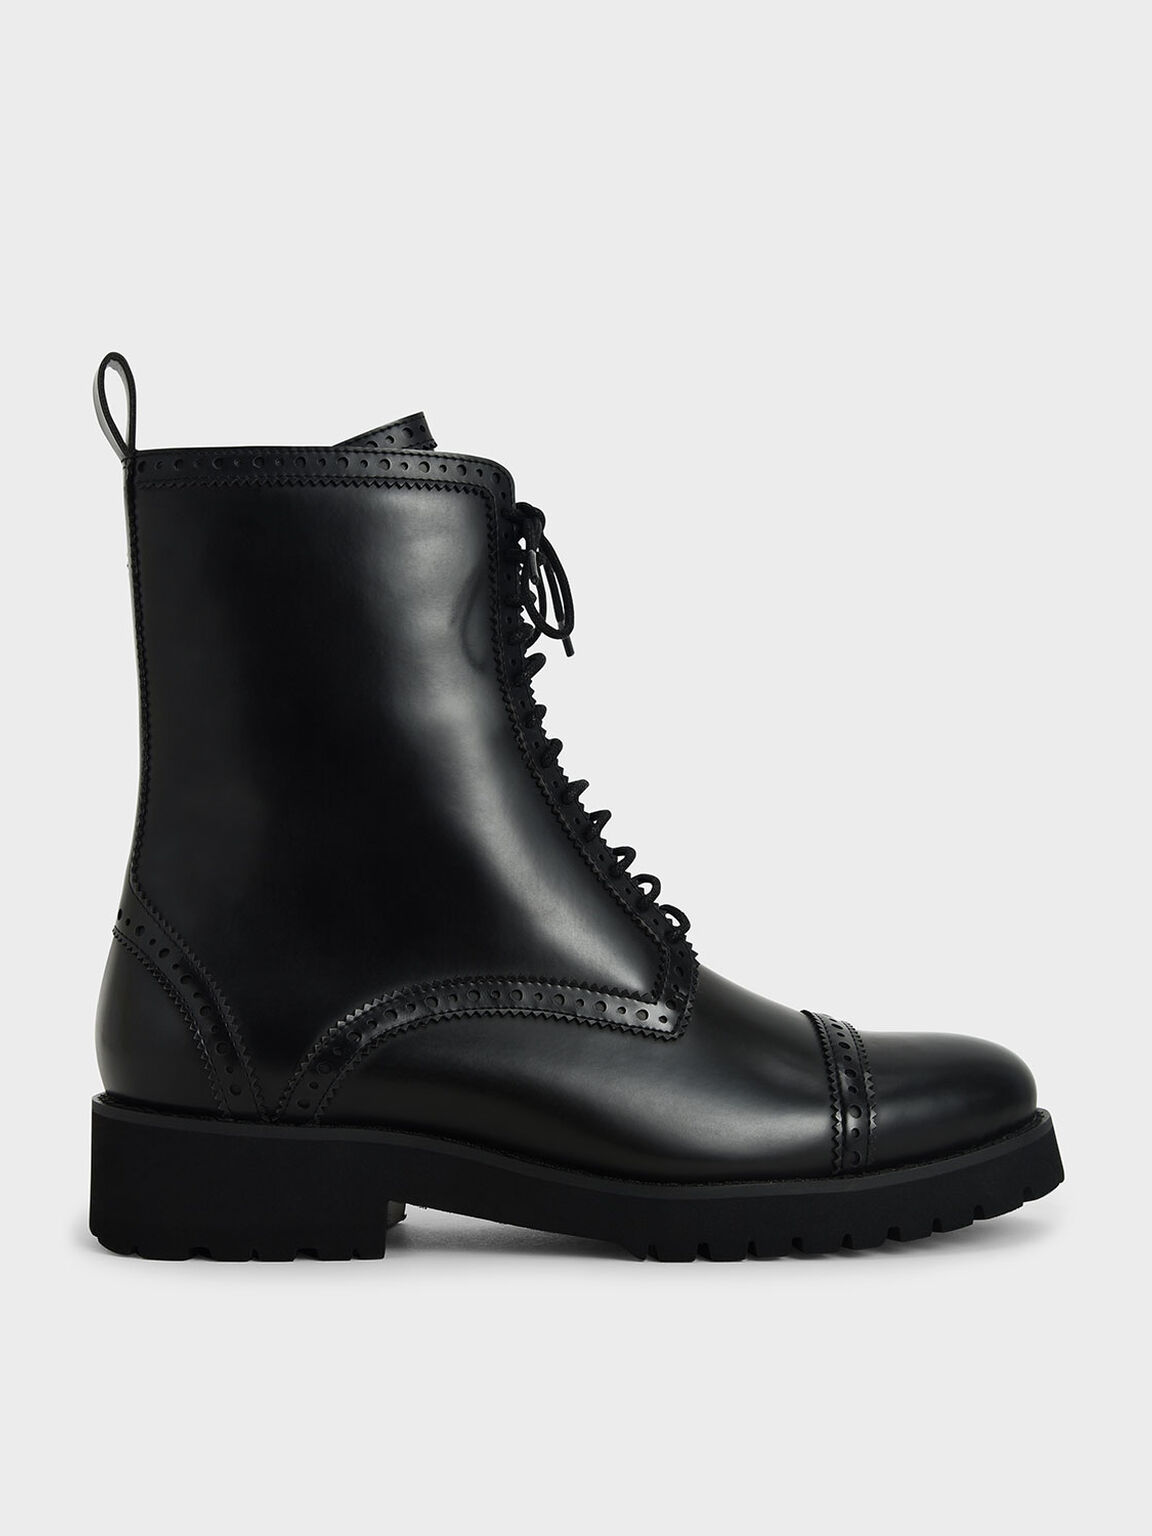 Brogue Ankle Boots, Black, hi-res